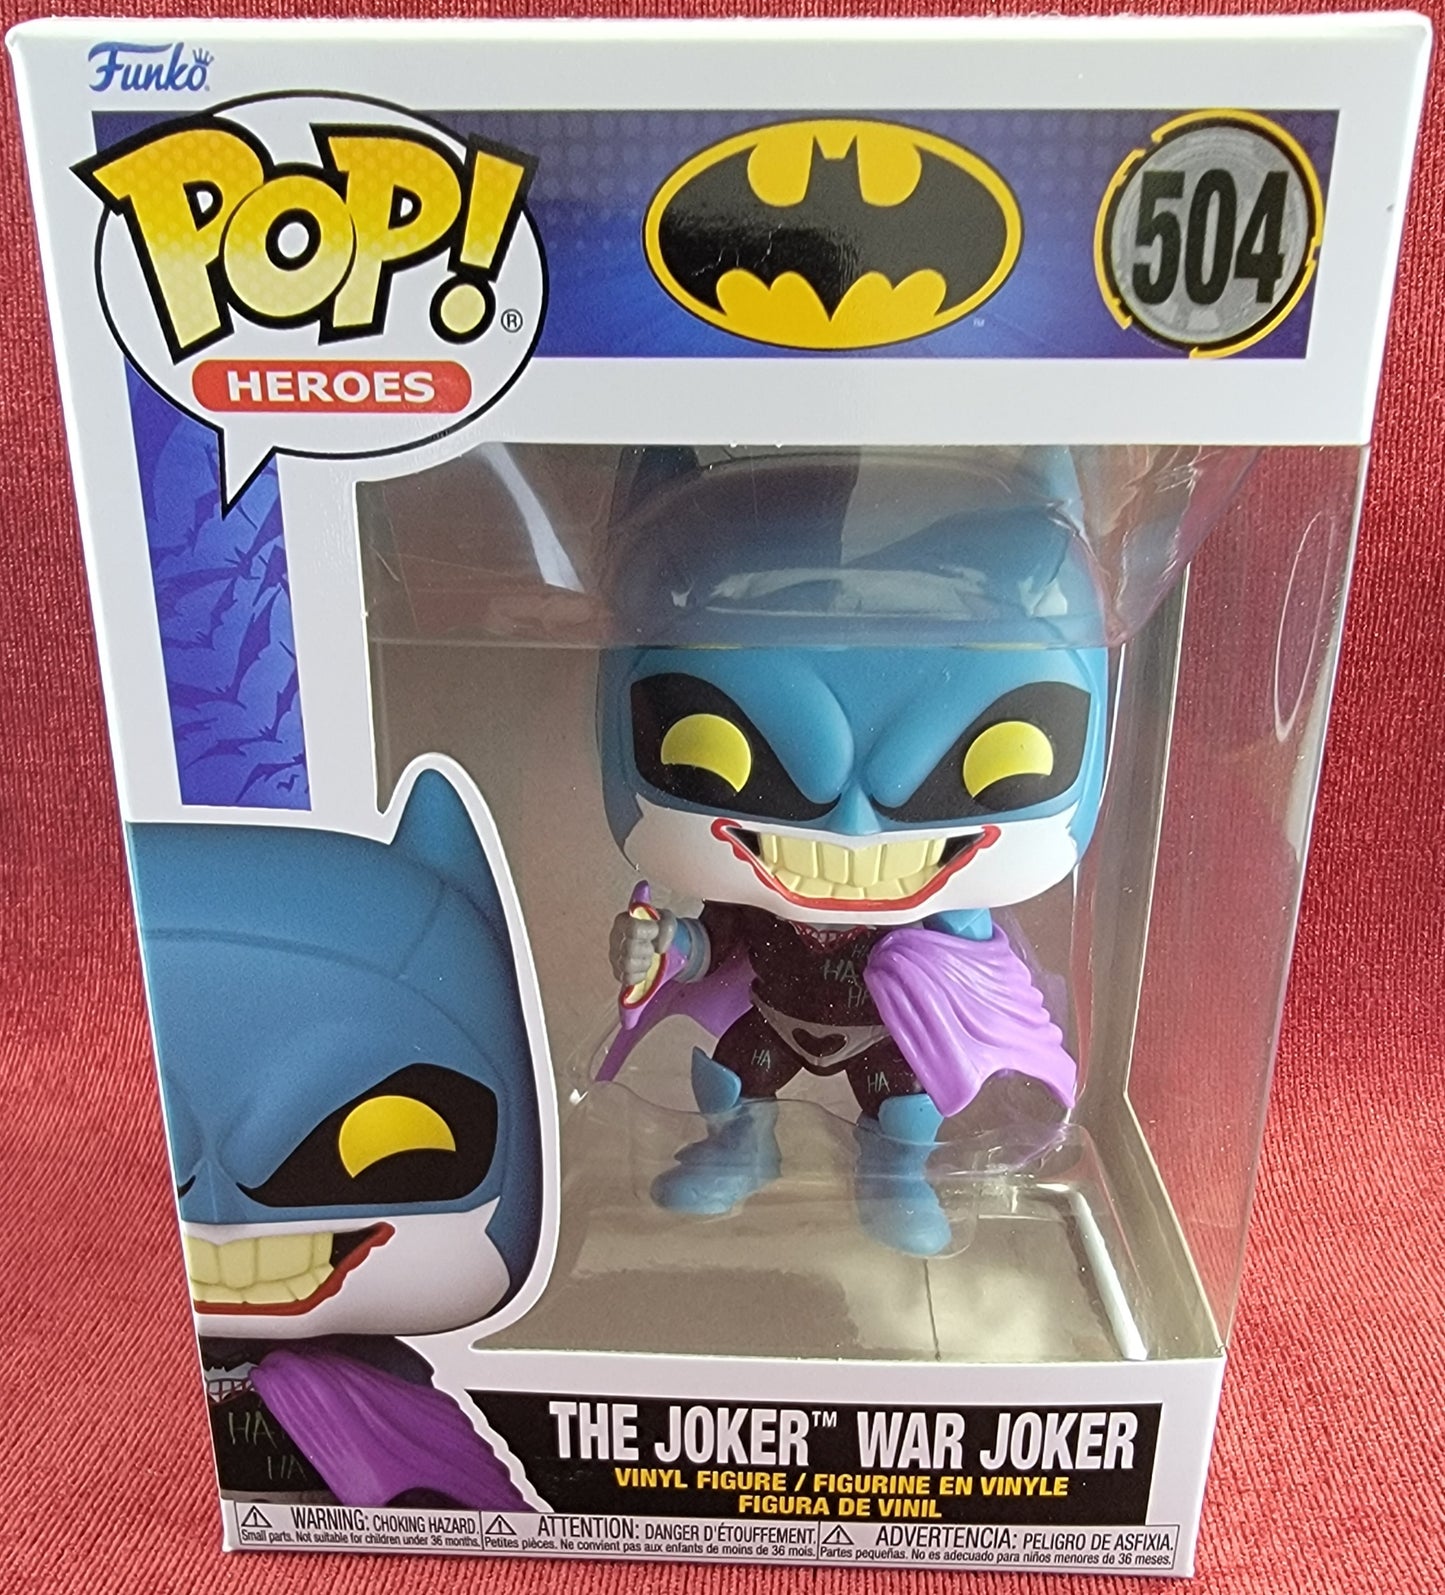 The joker war joker funko # 504 (nib)
With pop protector